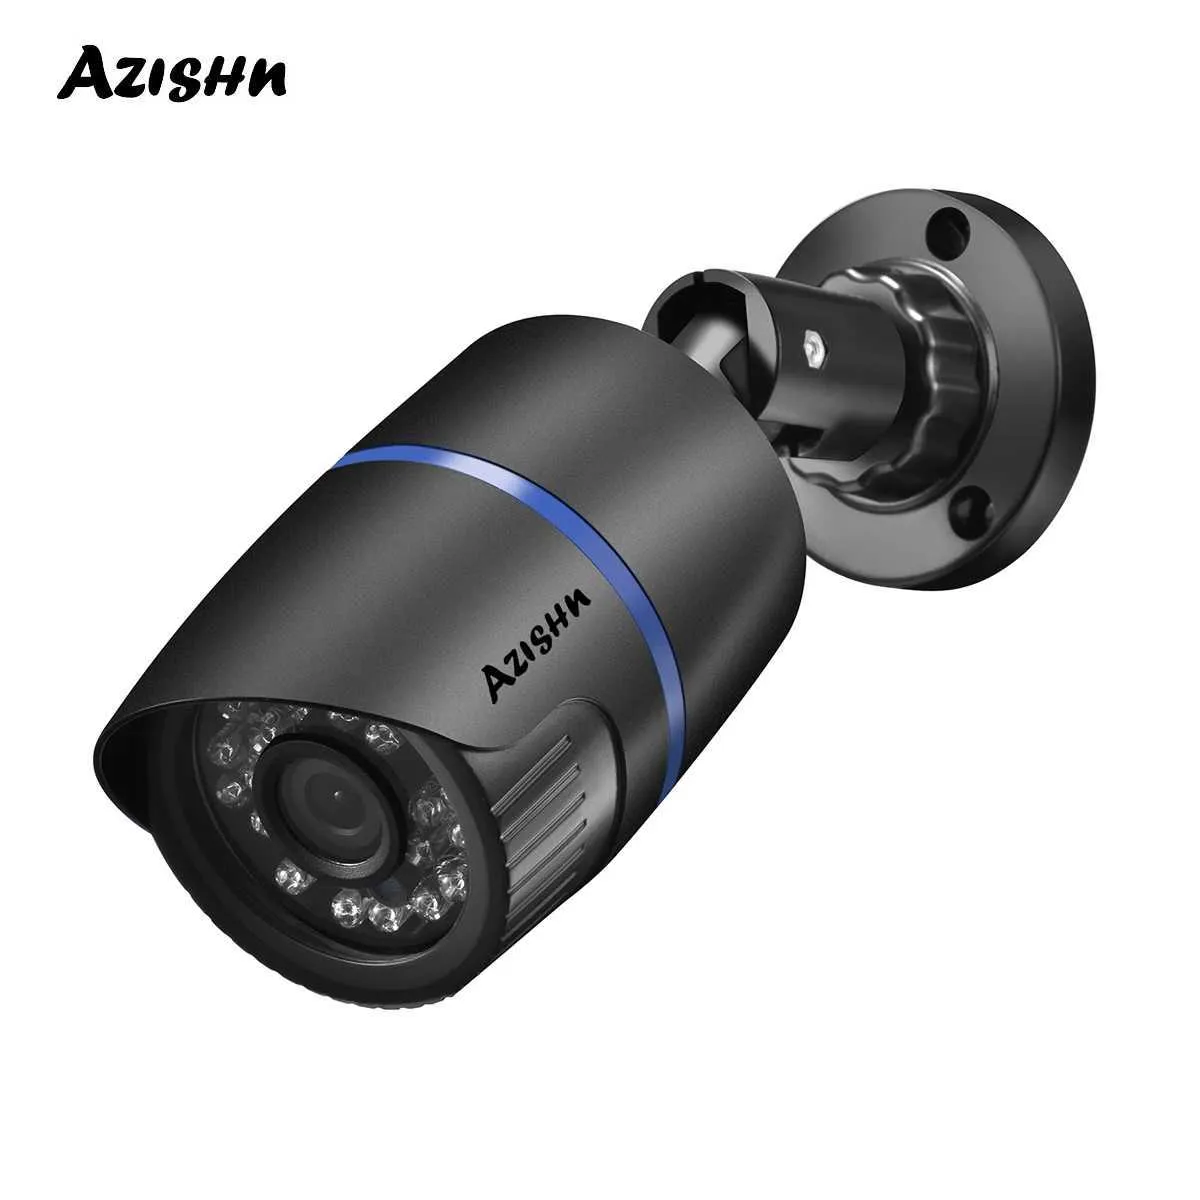 IP -camera's Azishn AHD Analog High Definition Surveillance Camera AHDM 5.0MP 720P/1080P AHD CCTV Camera Beveiliging Indoor/Outdoor 240413